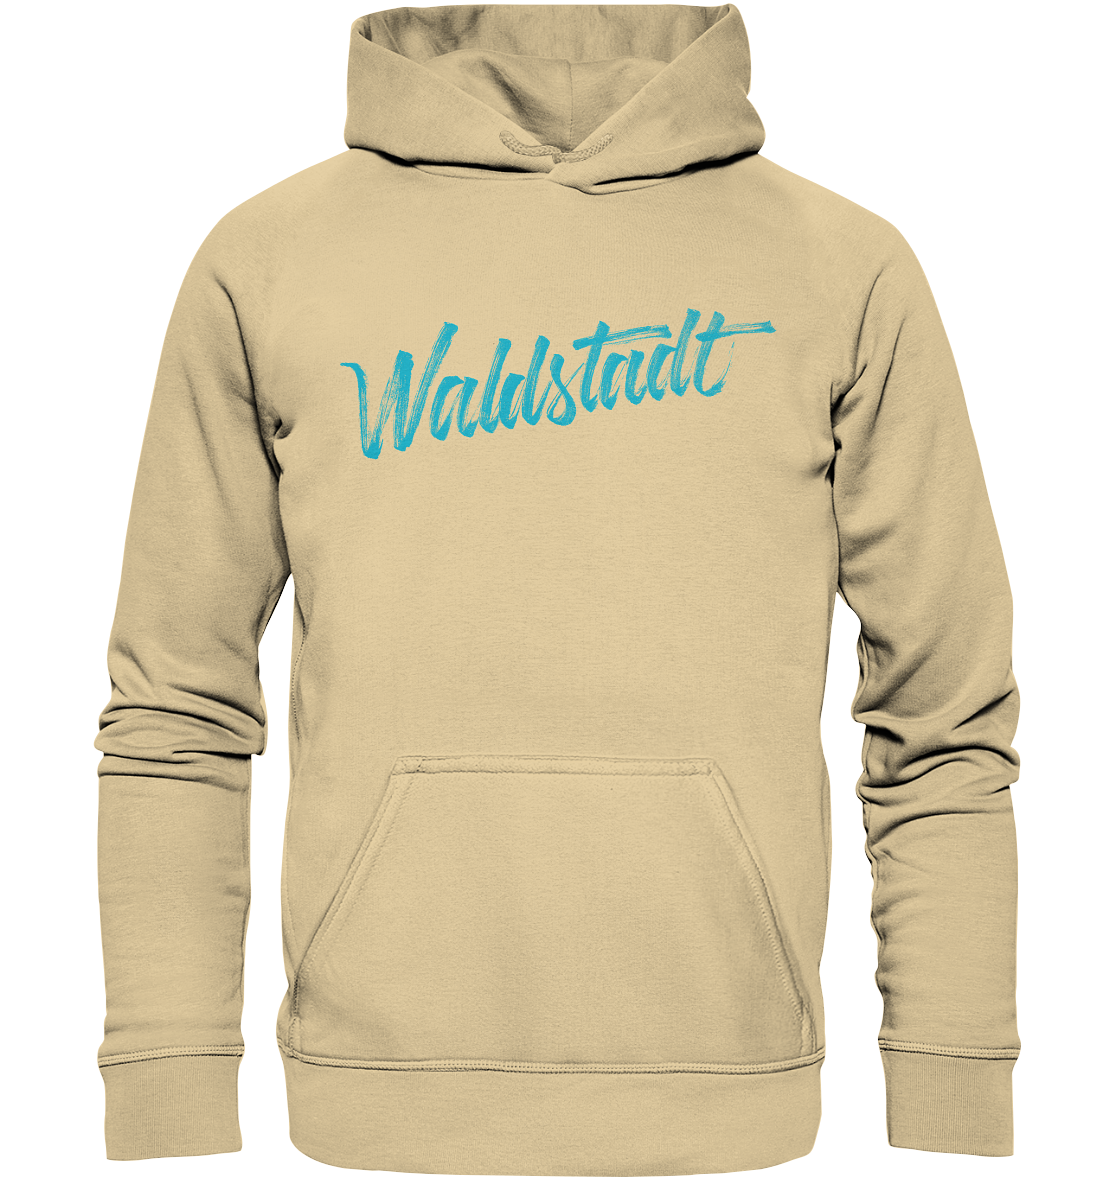 WaldstadtTAG - Classic Unisex Hoodie